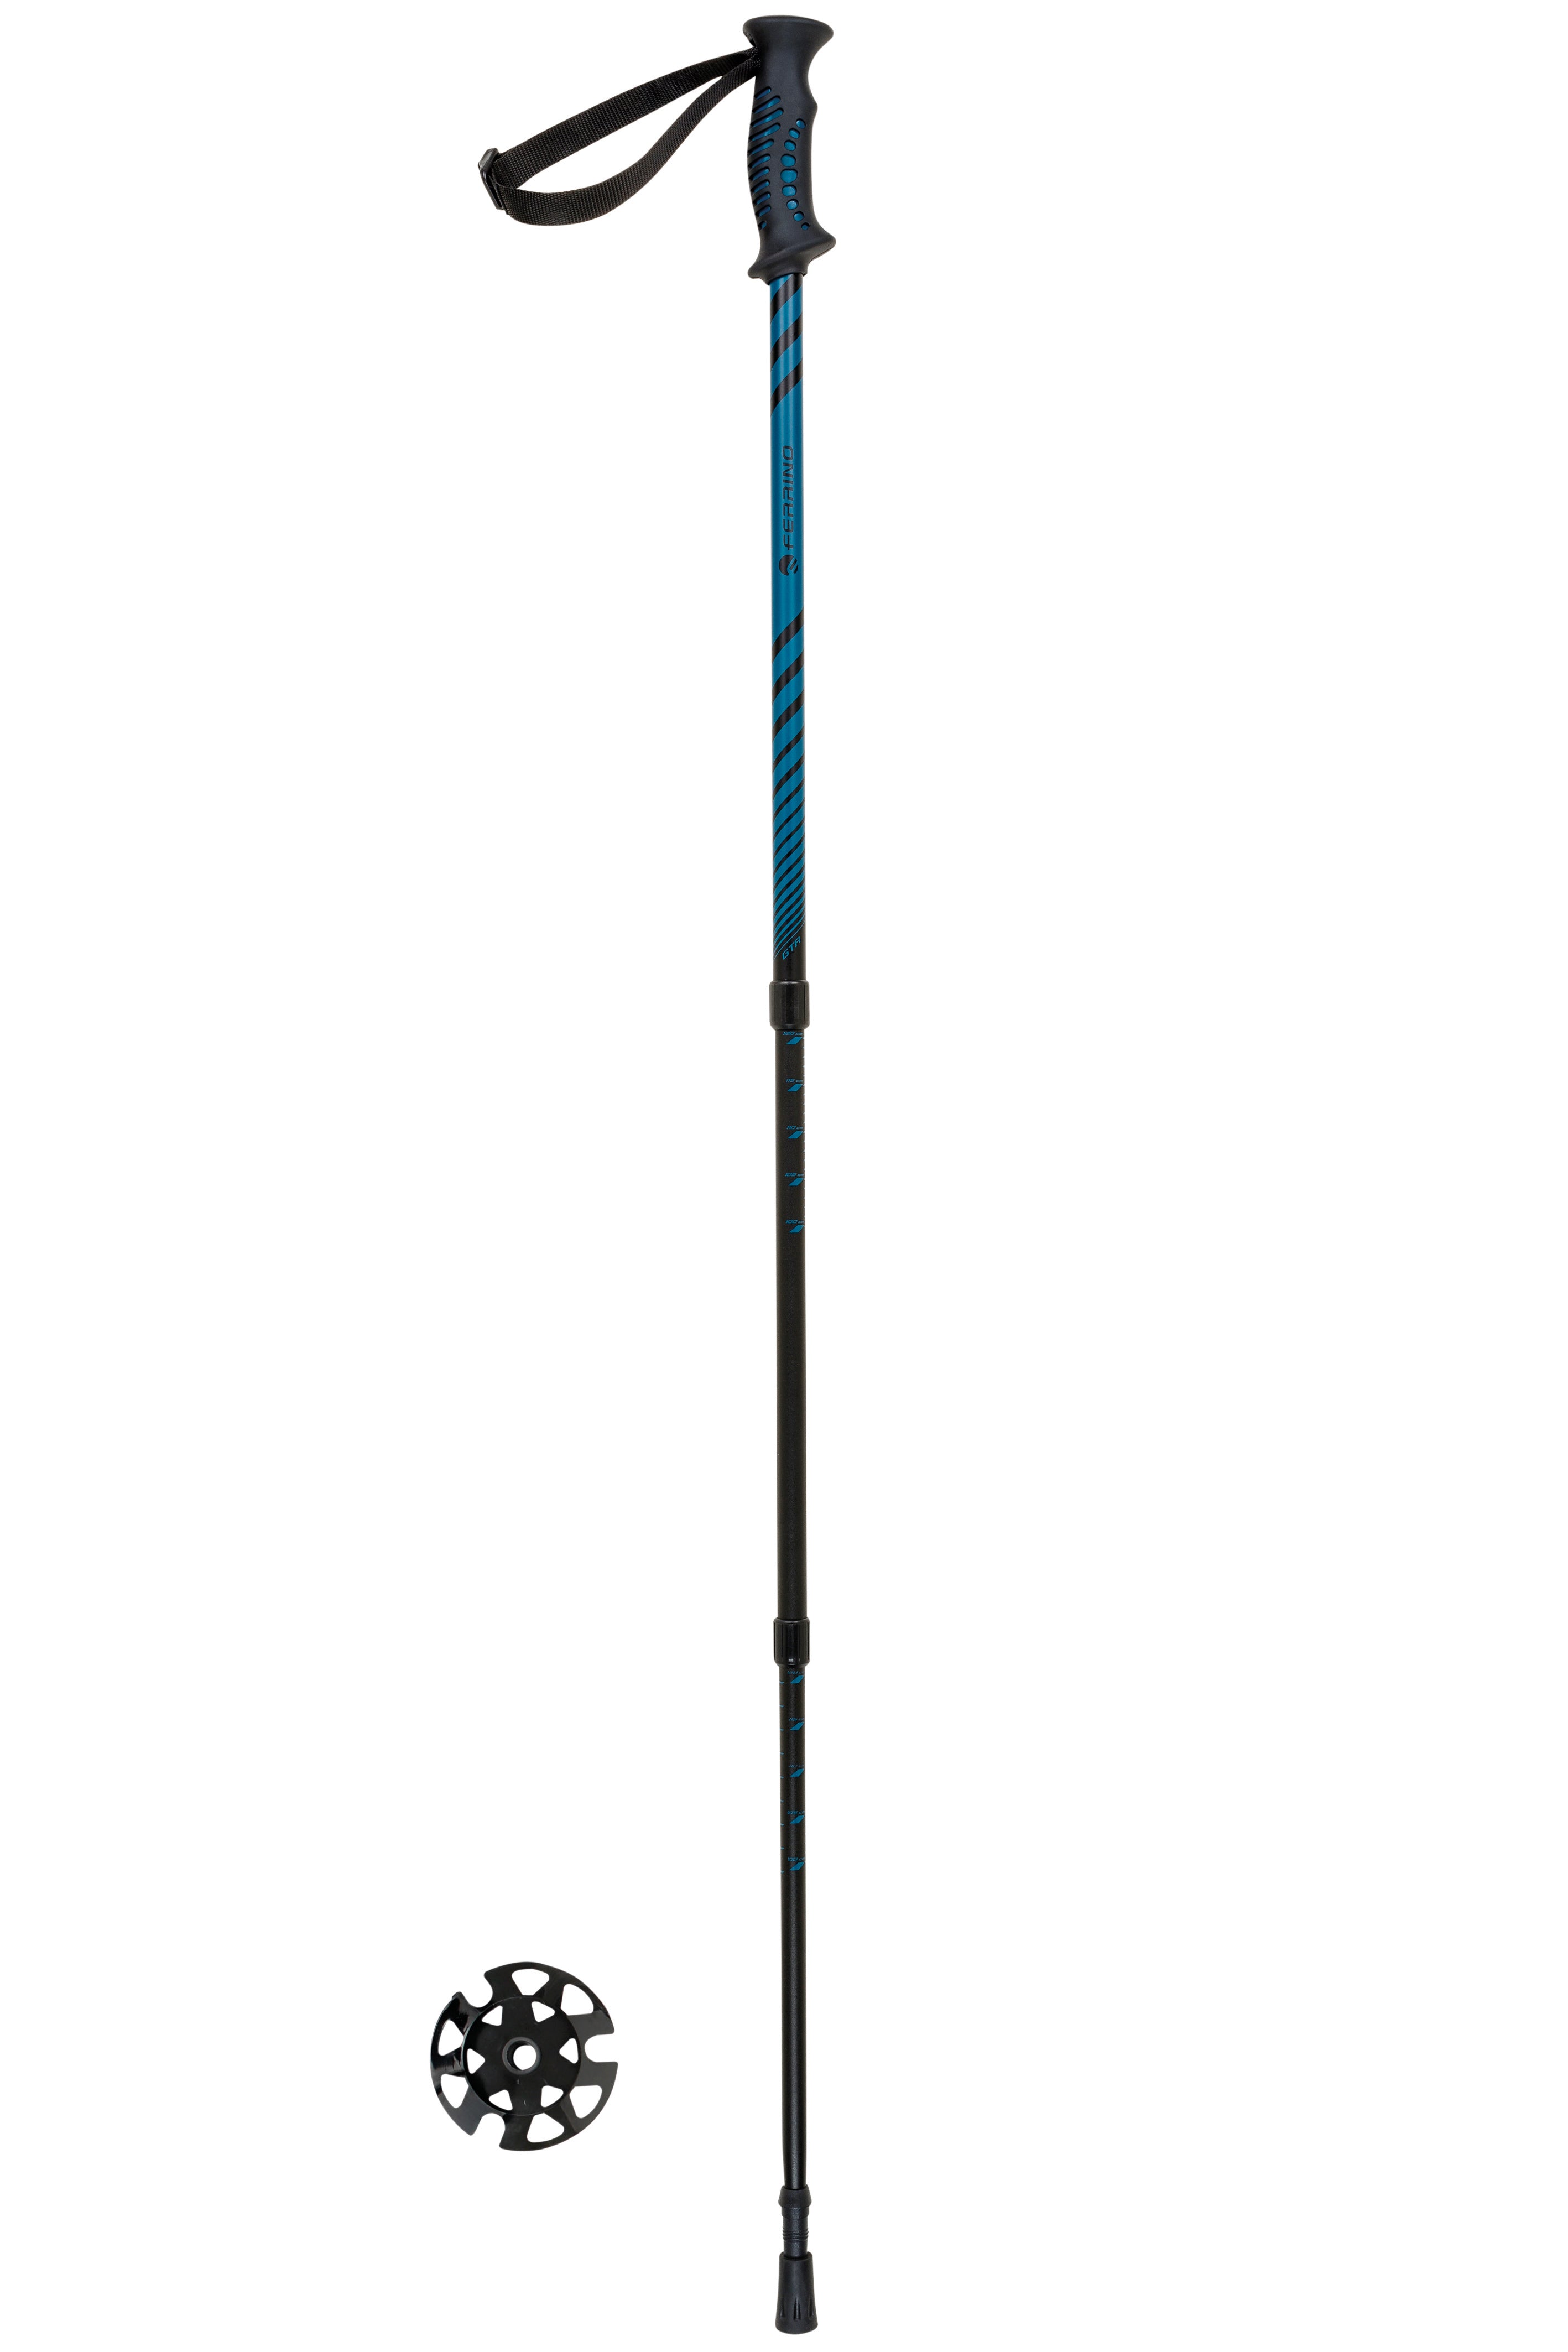 Pair of blue/black GTA trekking poles